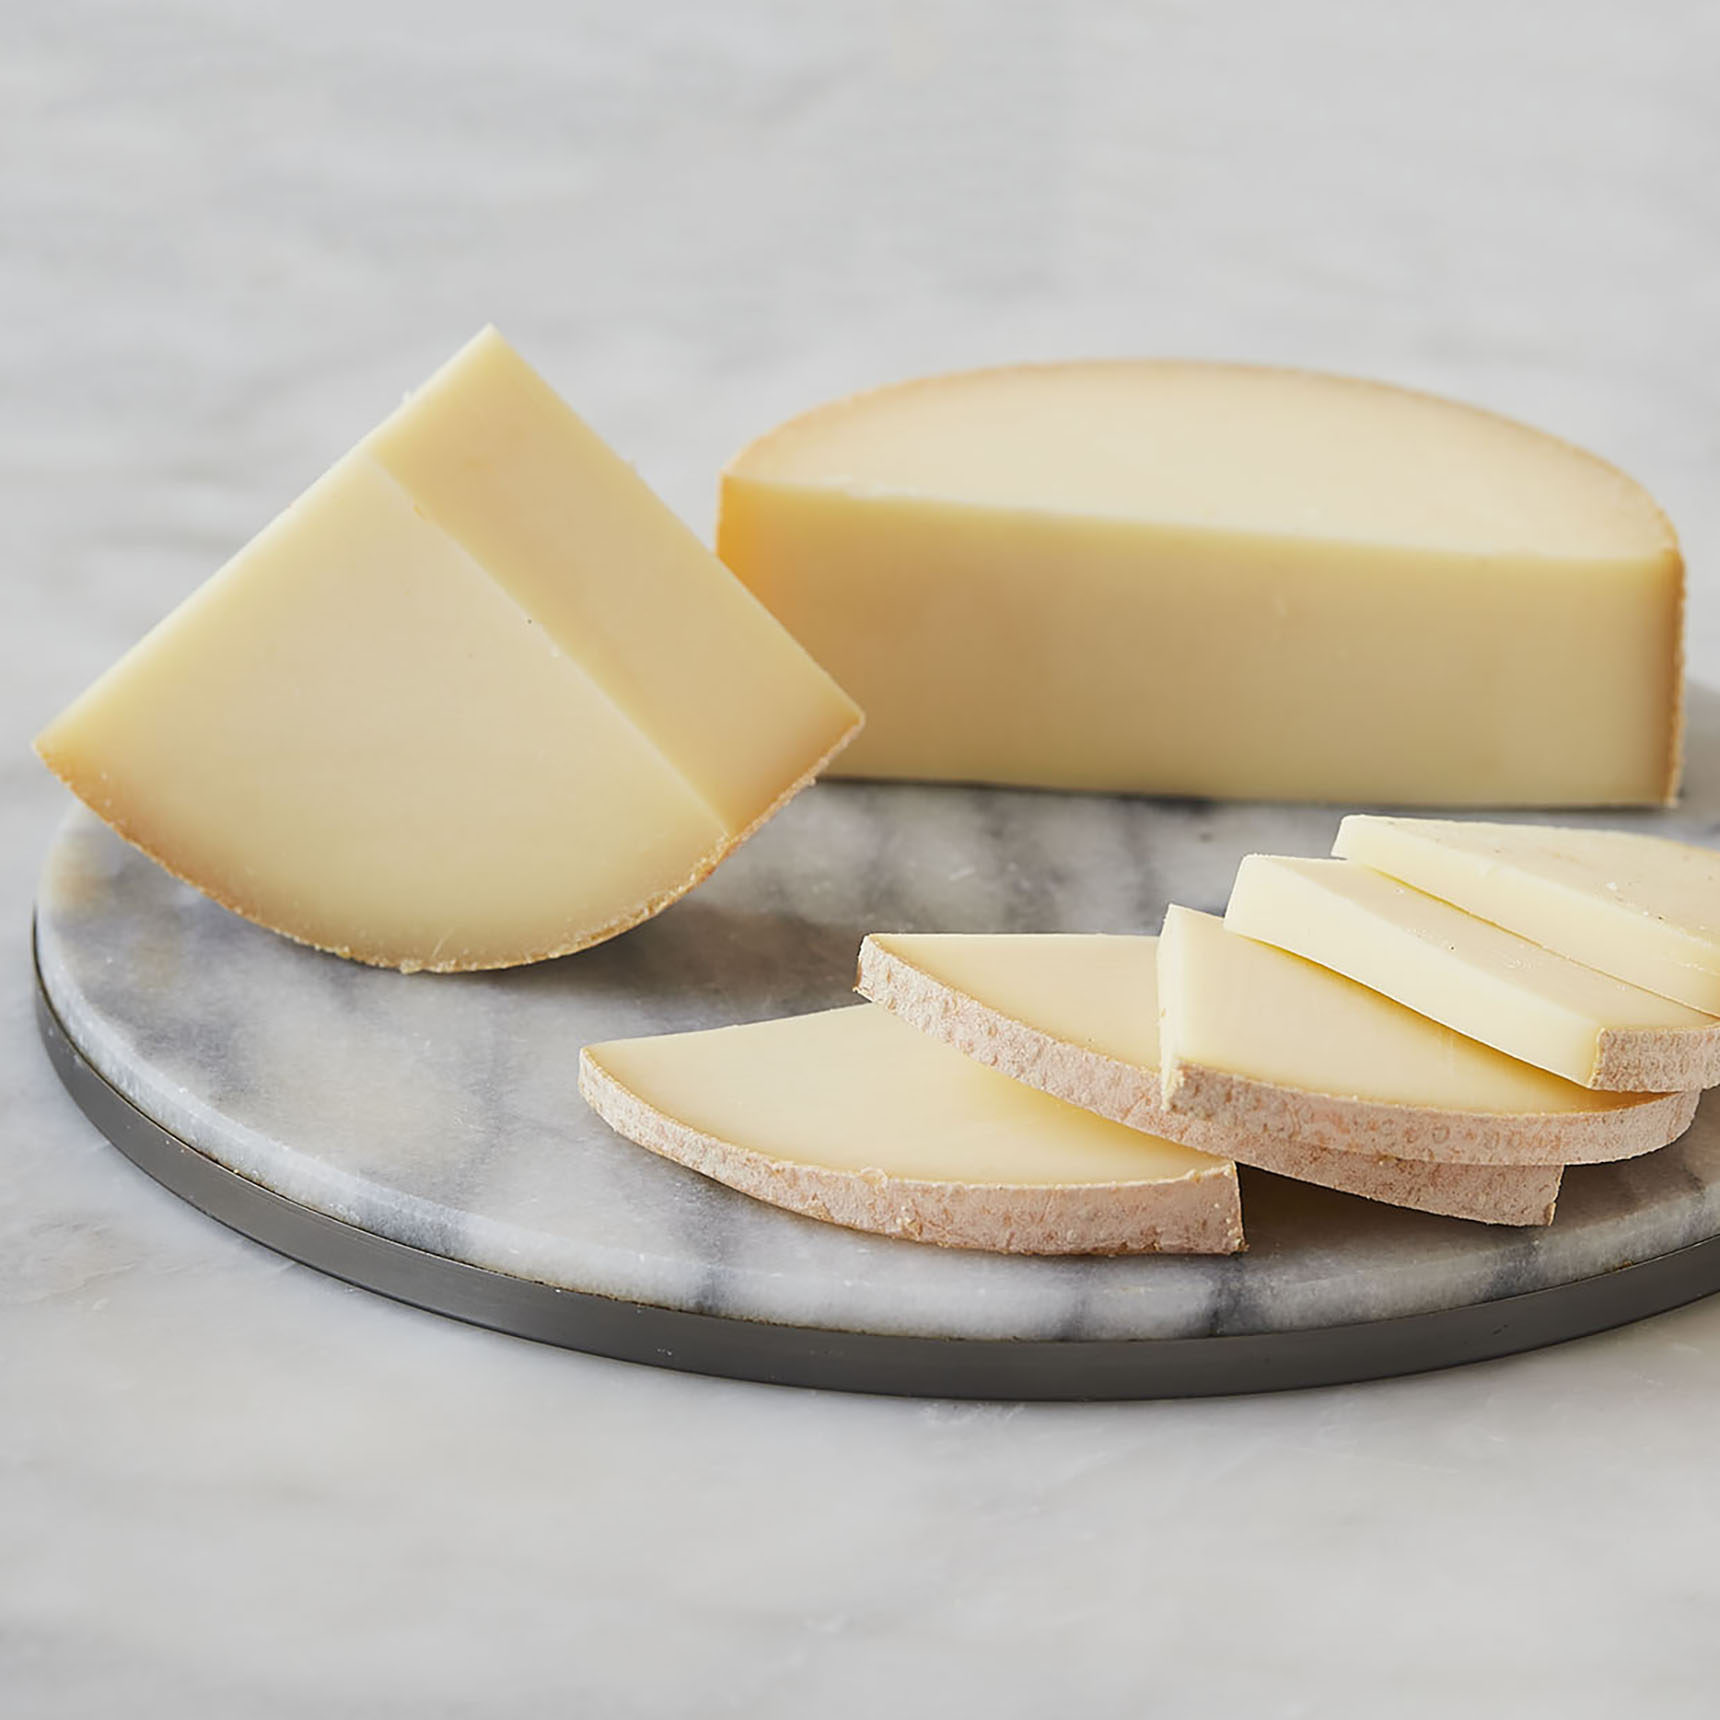 Tête De Moine – a fruity, robust, cow's milk cheese